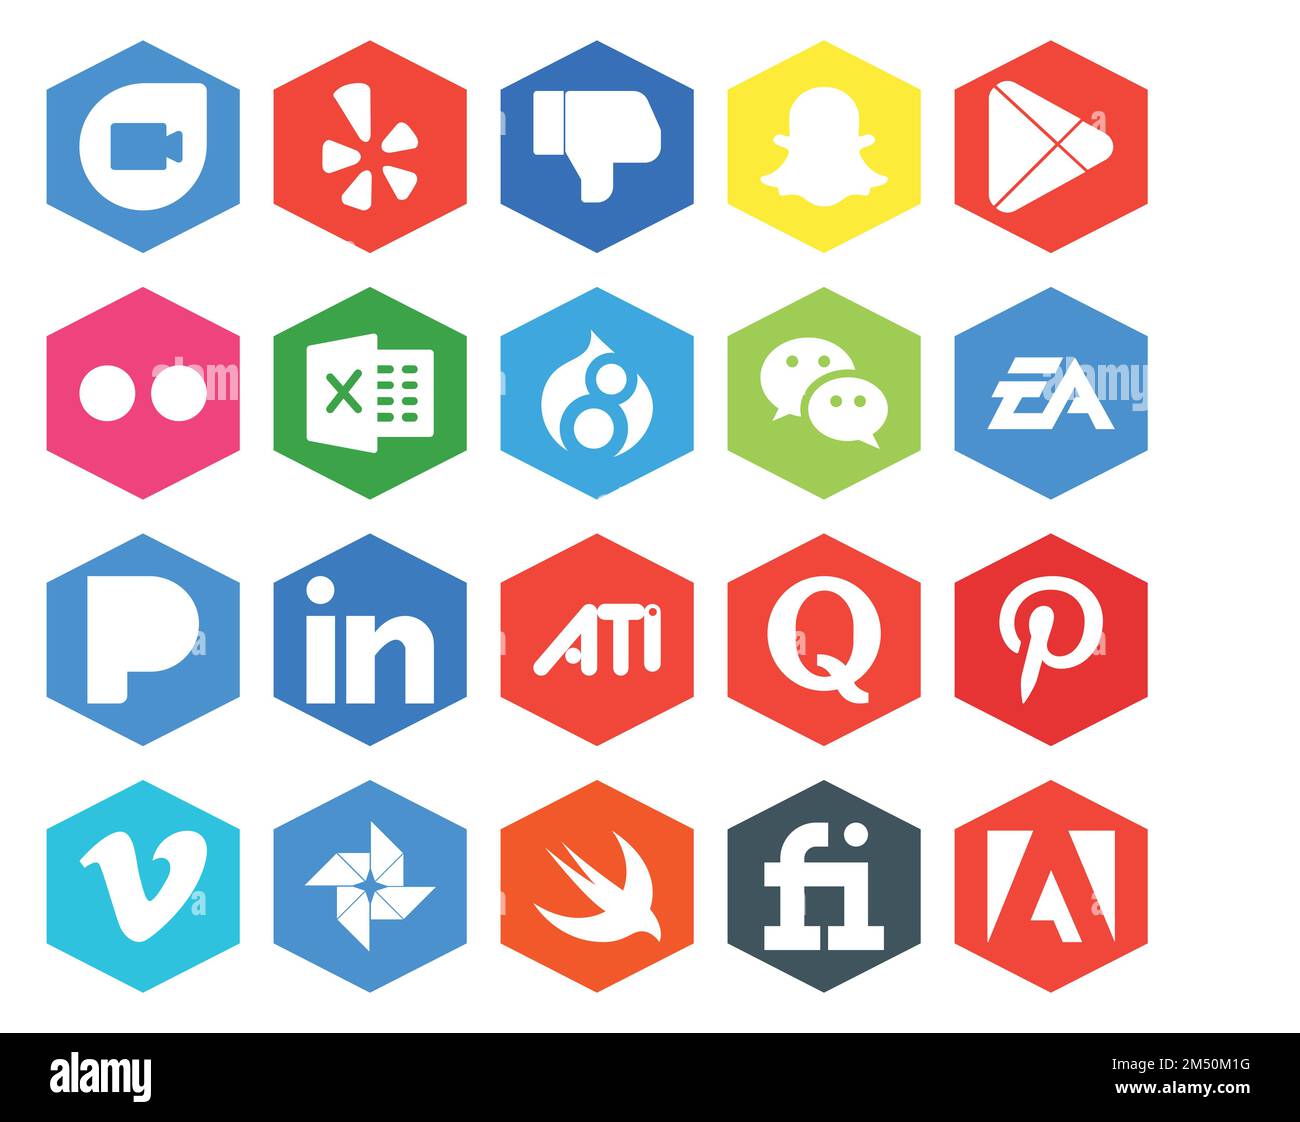 20 Social Media Icon Pack Including quora. linkedin. drupal. pandora. ea  Stock Vector Image & Art - Alamy